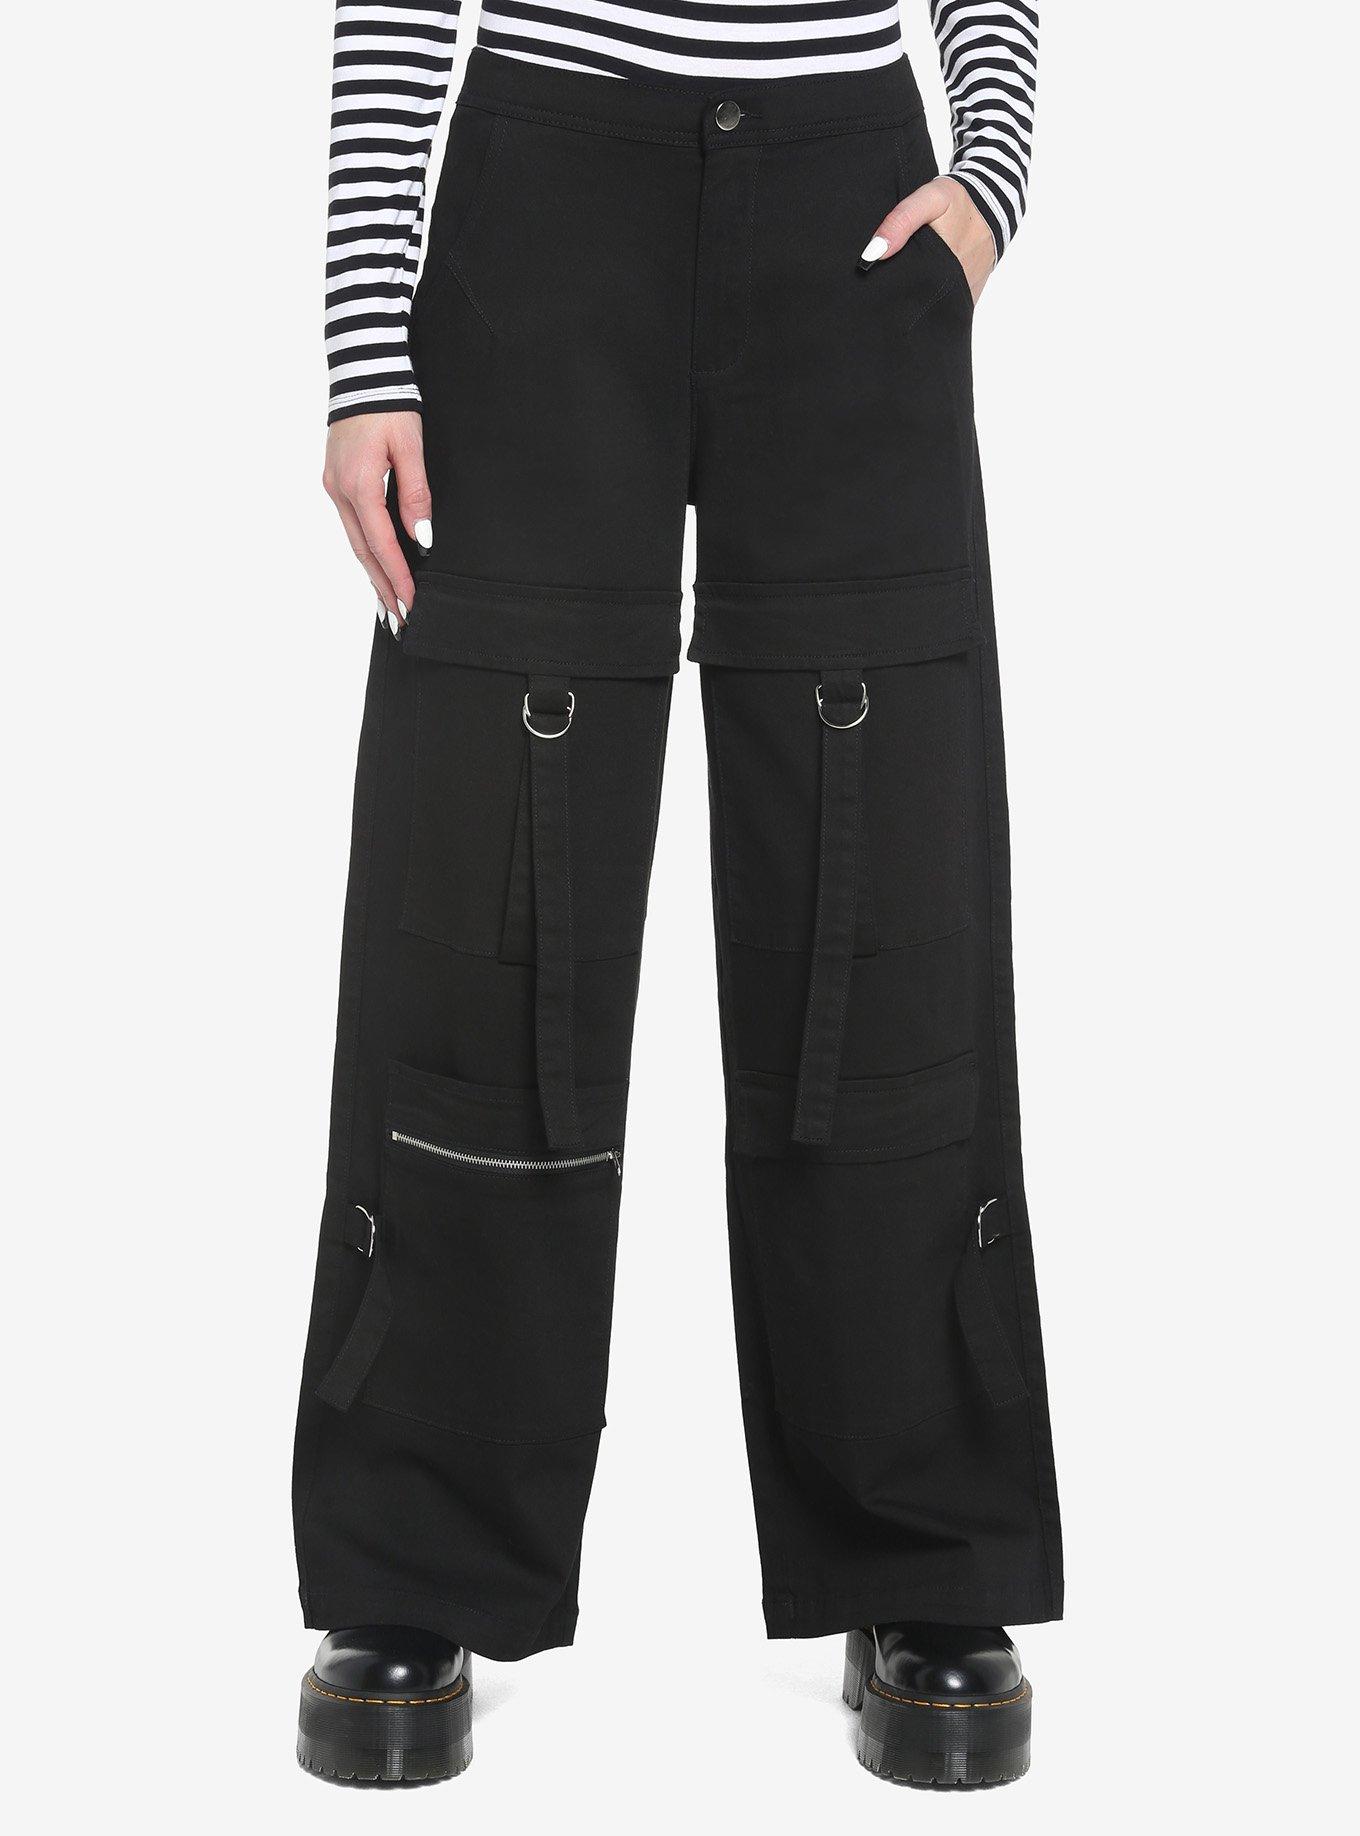 Hot Topic Black Denim Ankle Zip Girls Cargo Pants